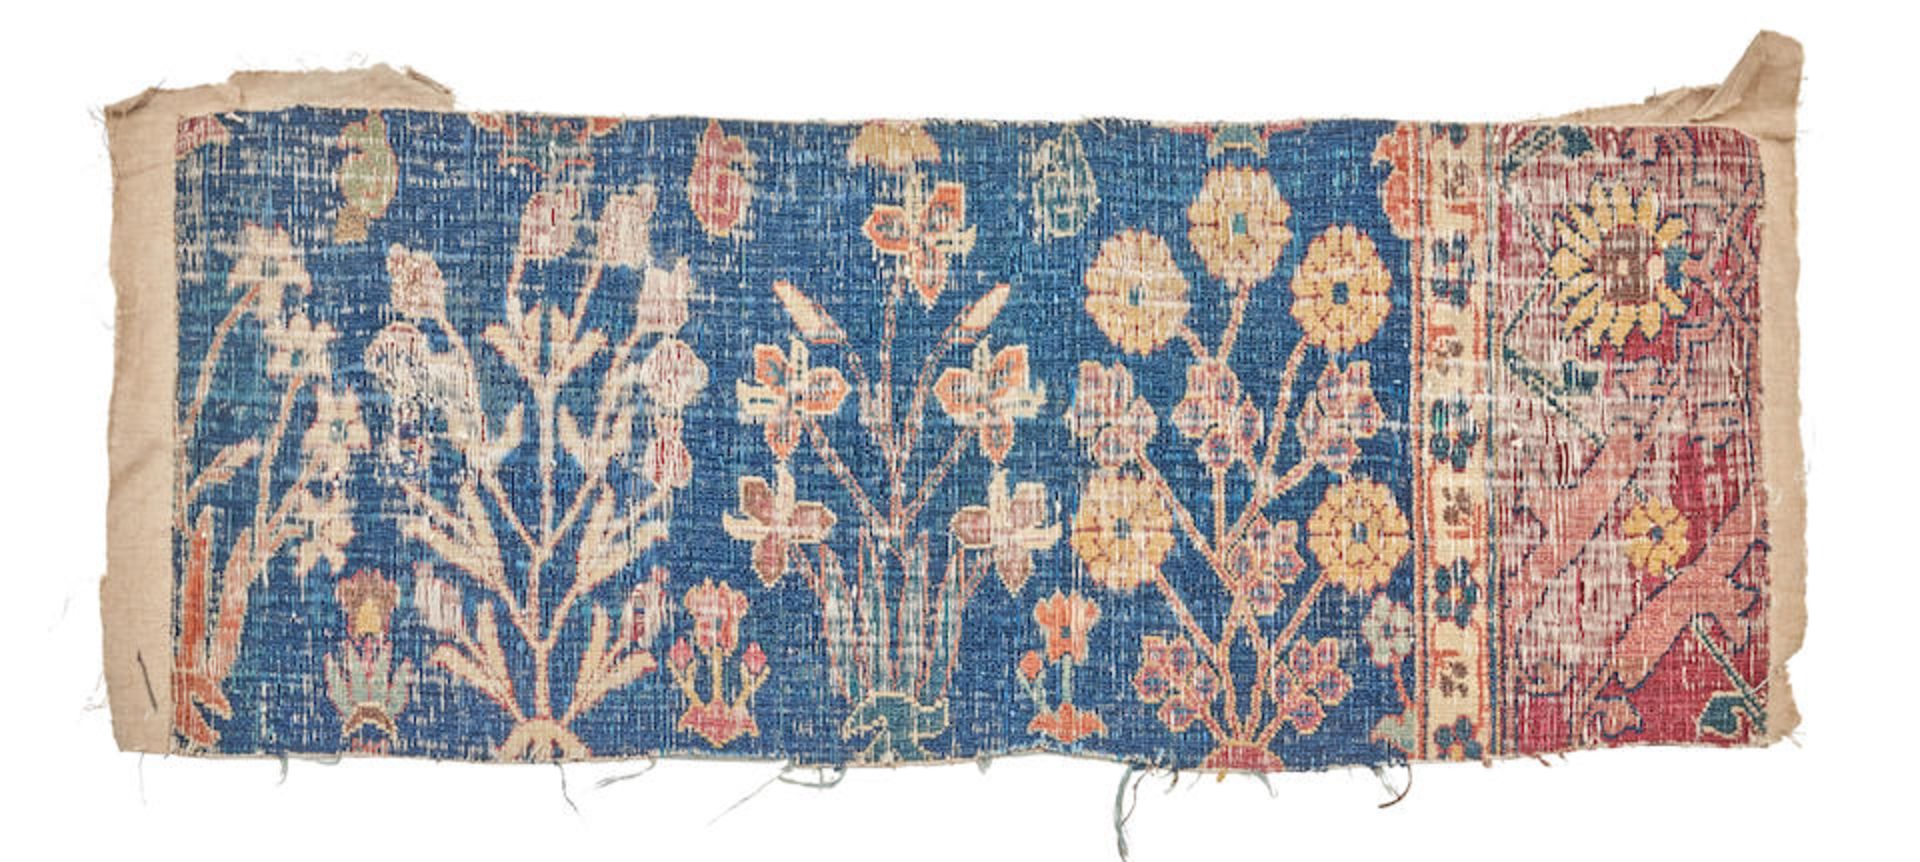 Mughal Carpet Fragment Iran 2 ft. 8 in. x 1 ft. 1 in.